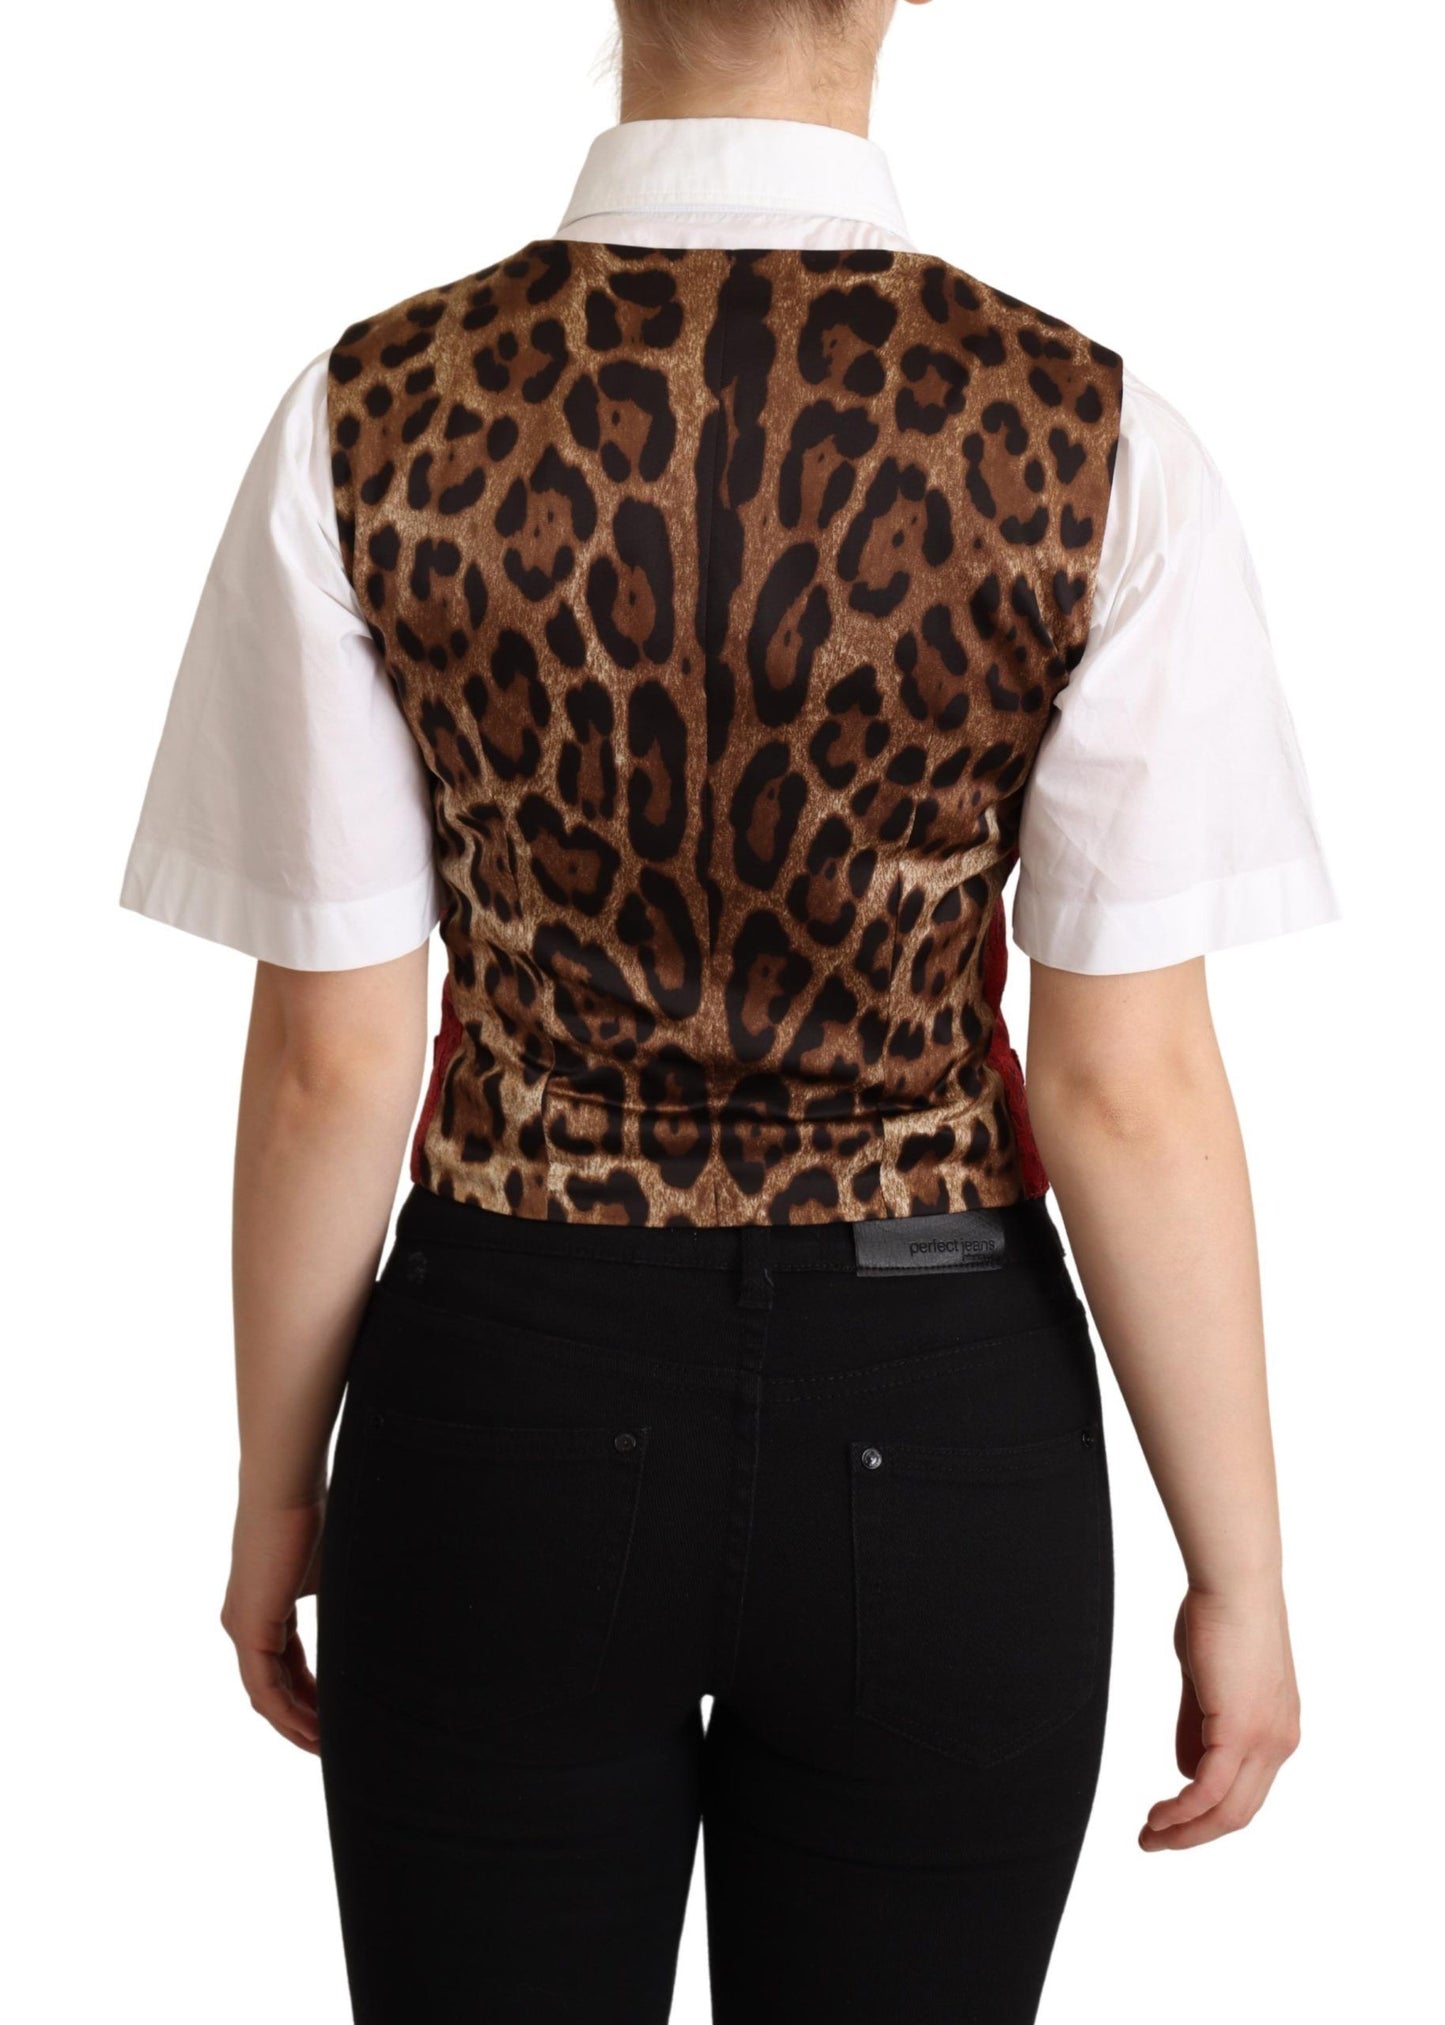 Dolce & Gabbana Red Brocade Leopard Print Waistcoat Vest